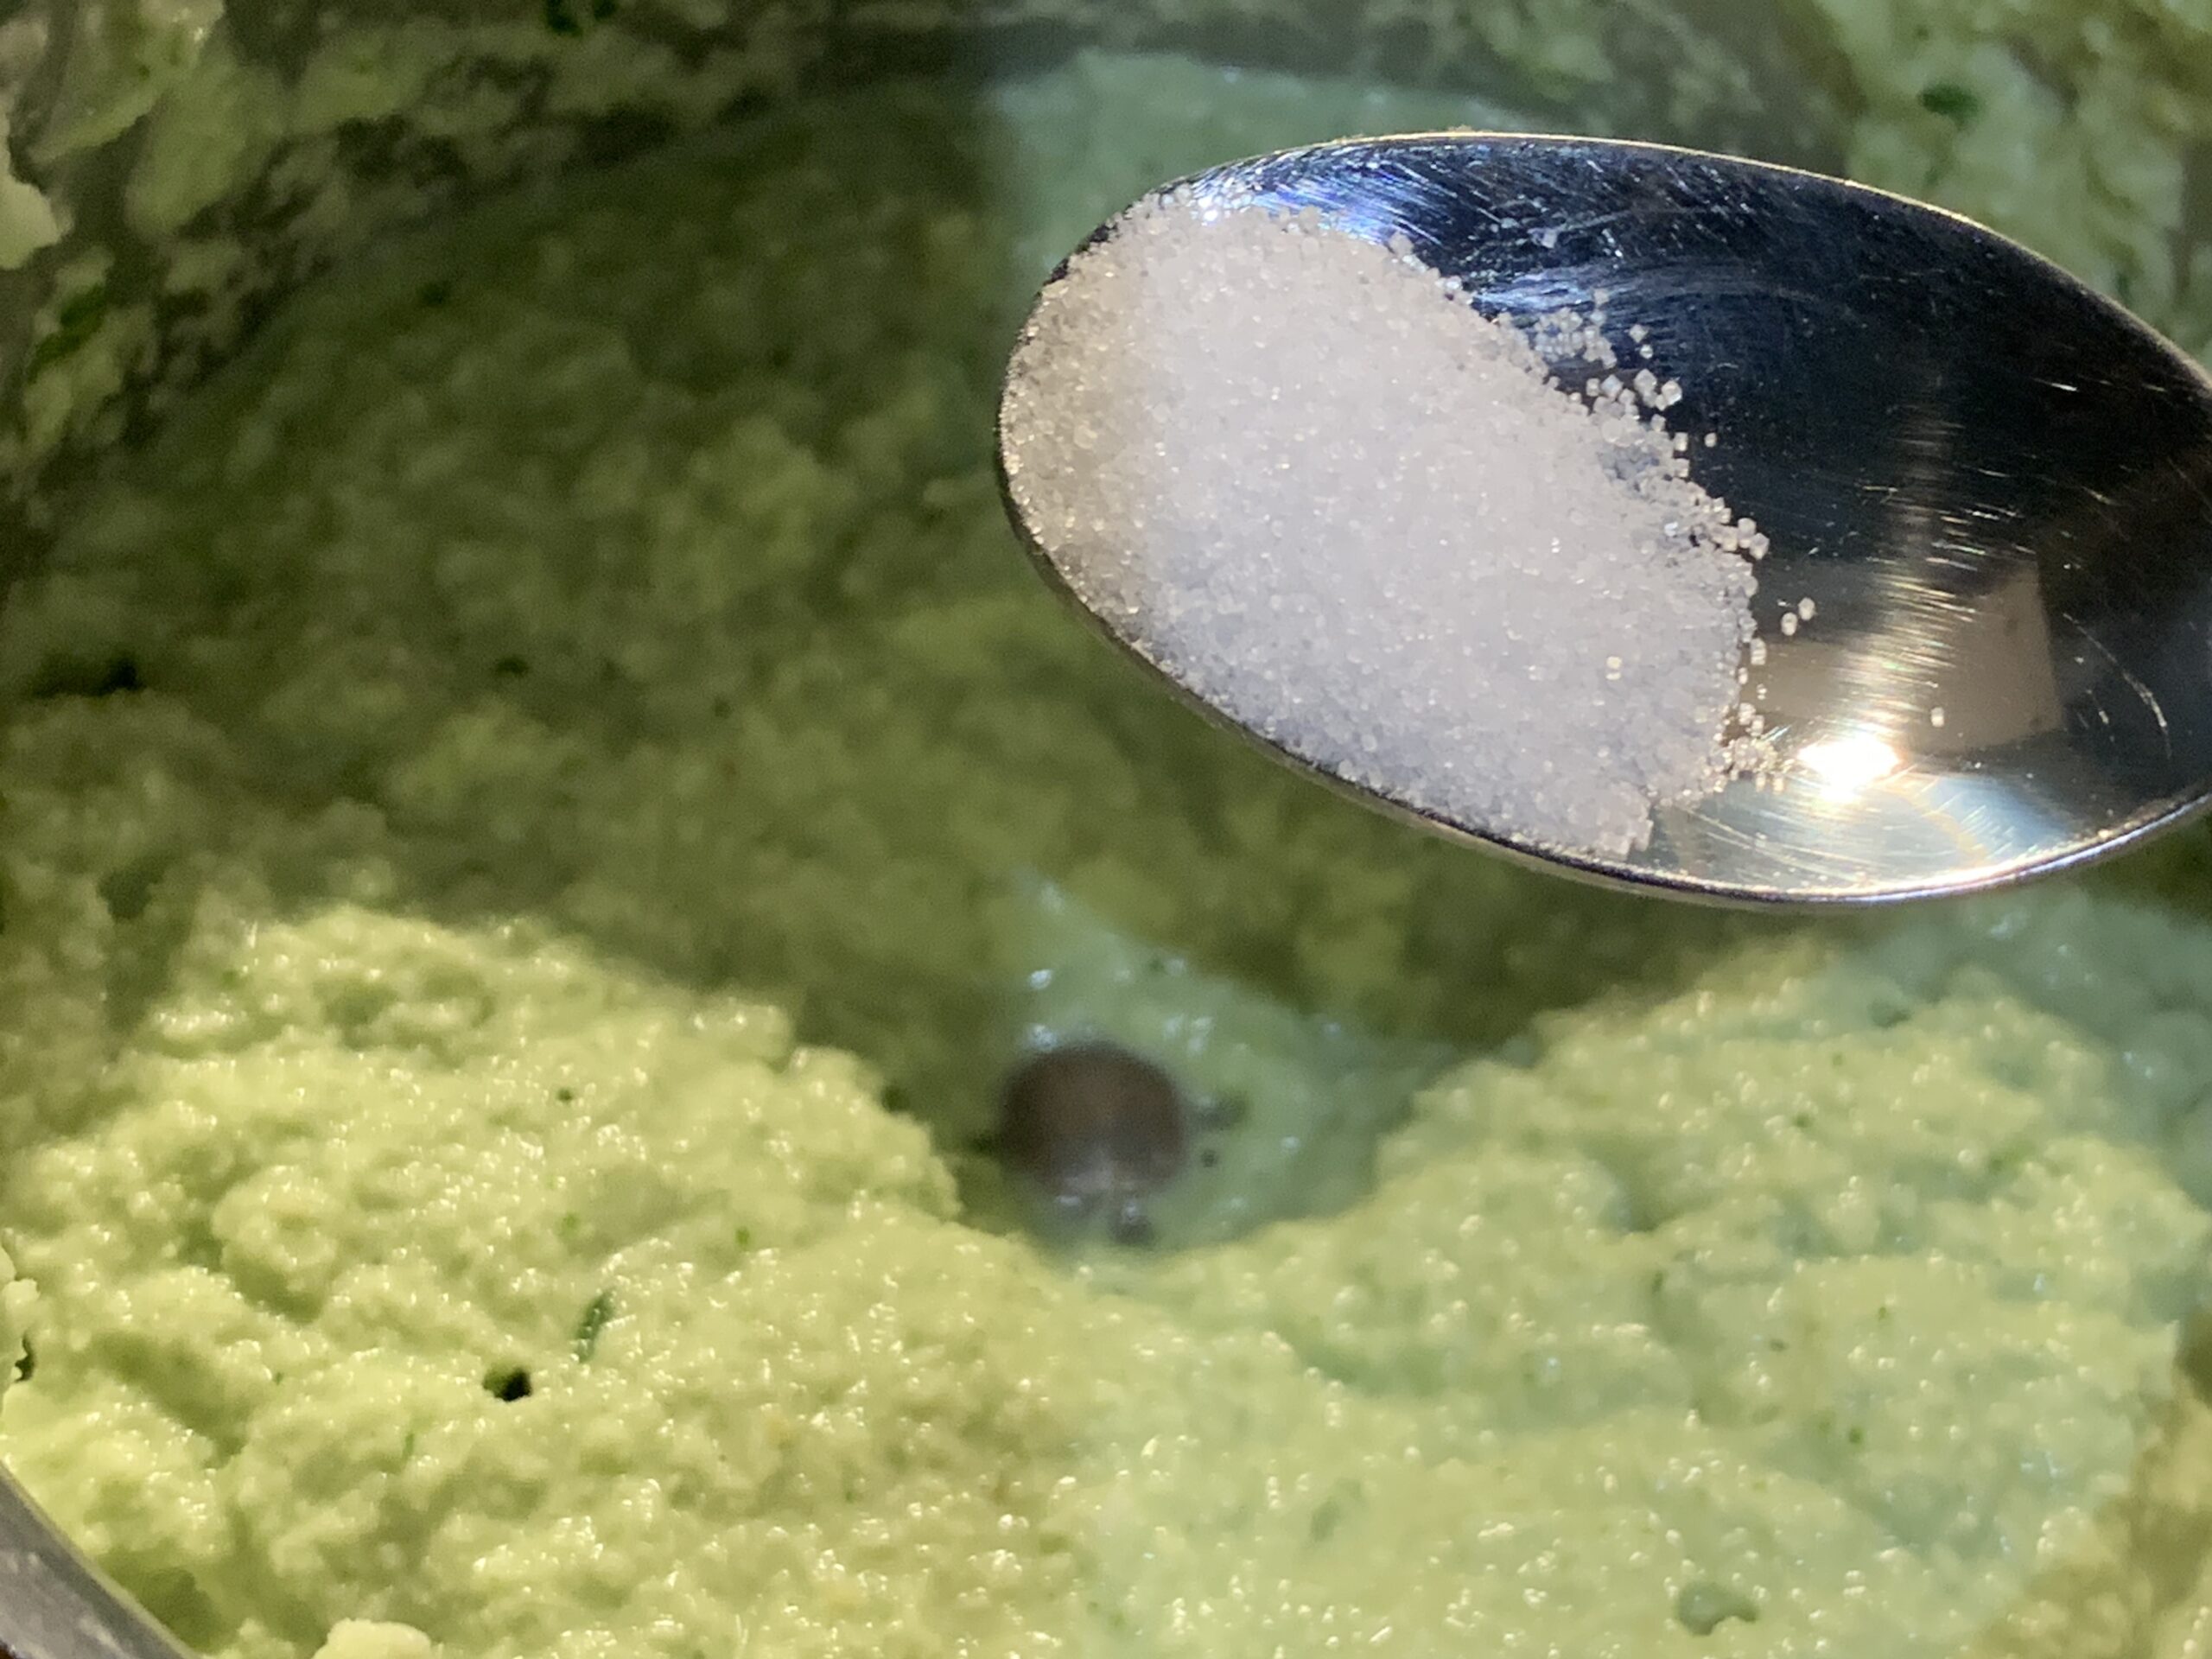 Green Coconut Chutney Recipe